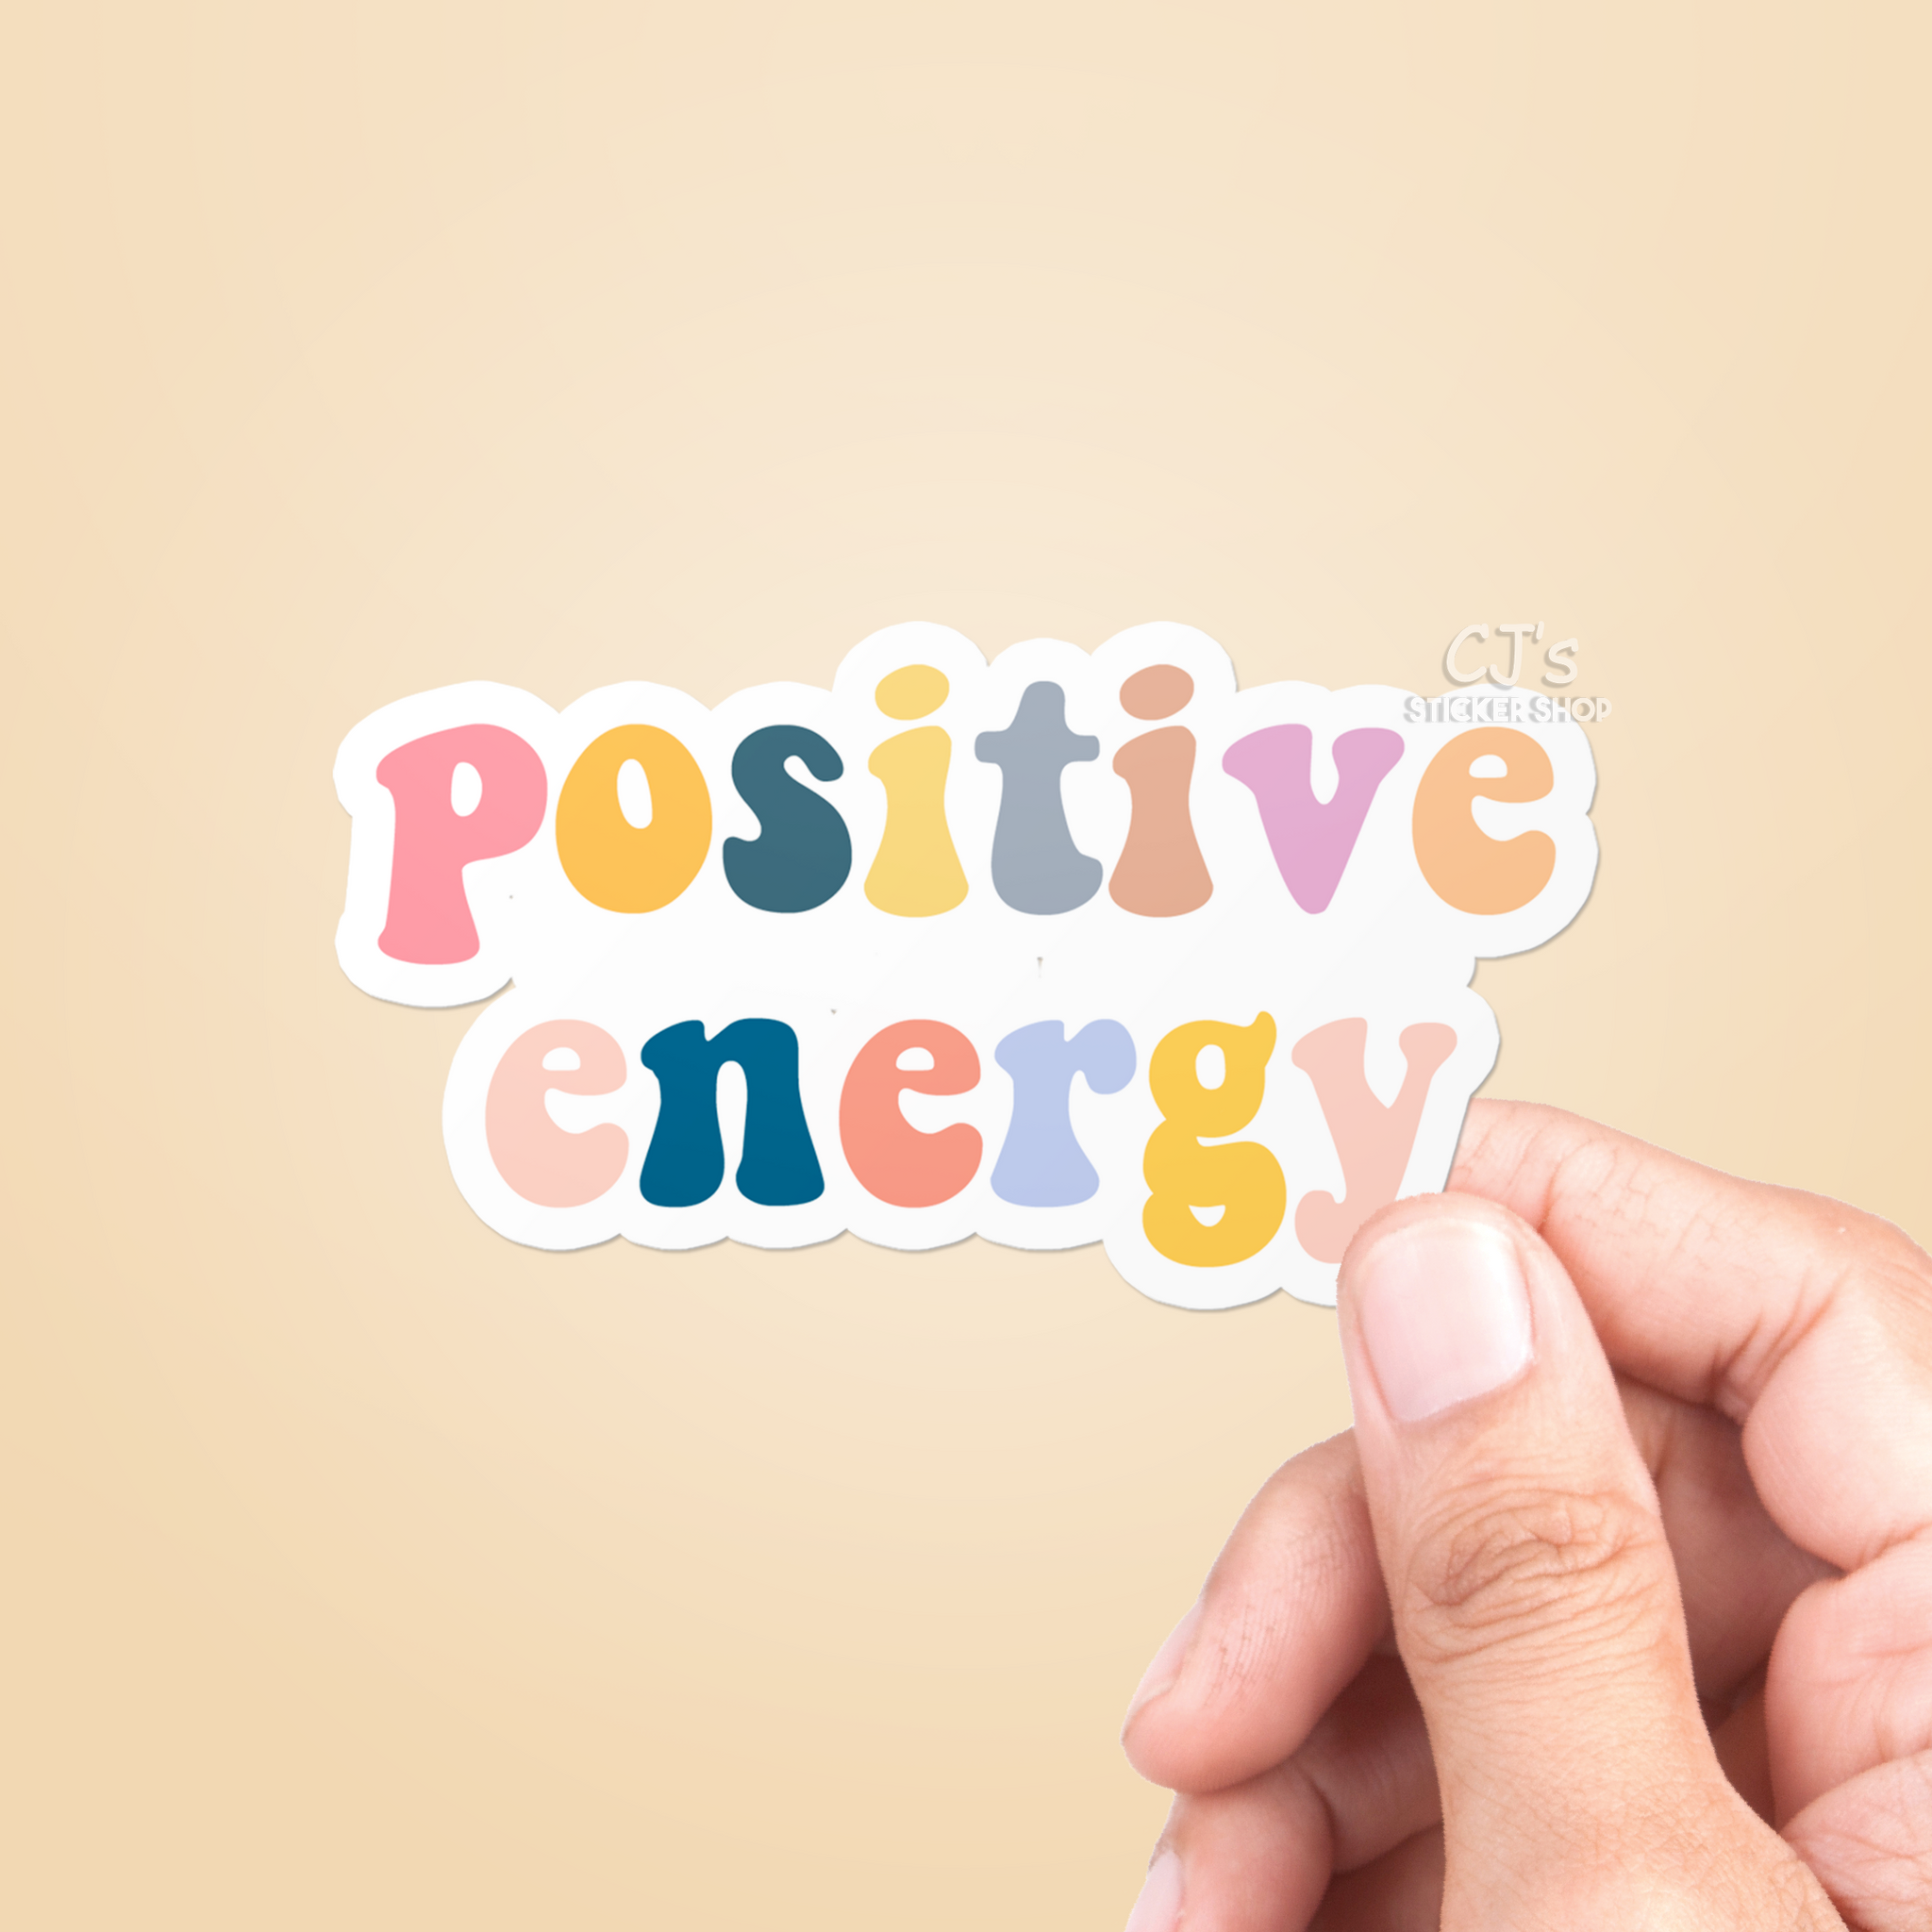 Positive Energy Sticker